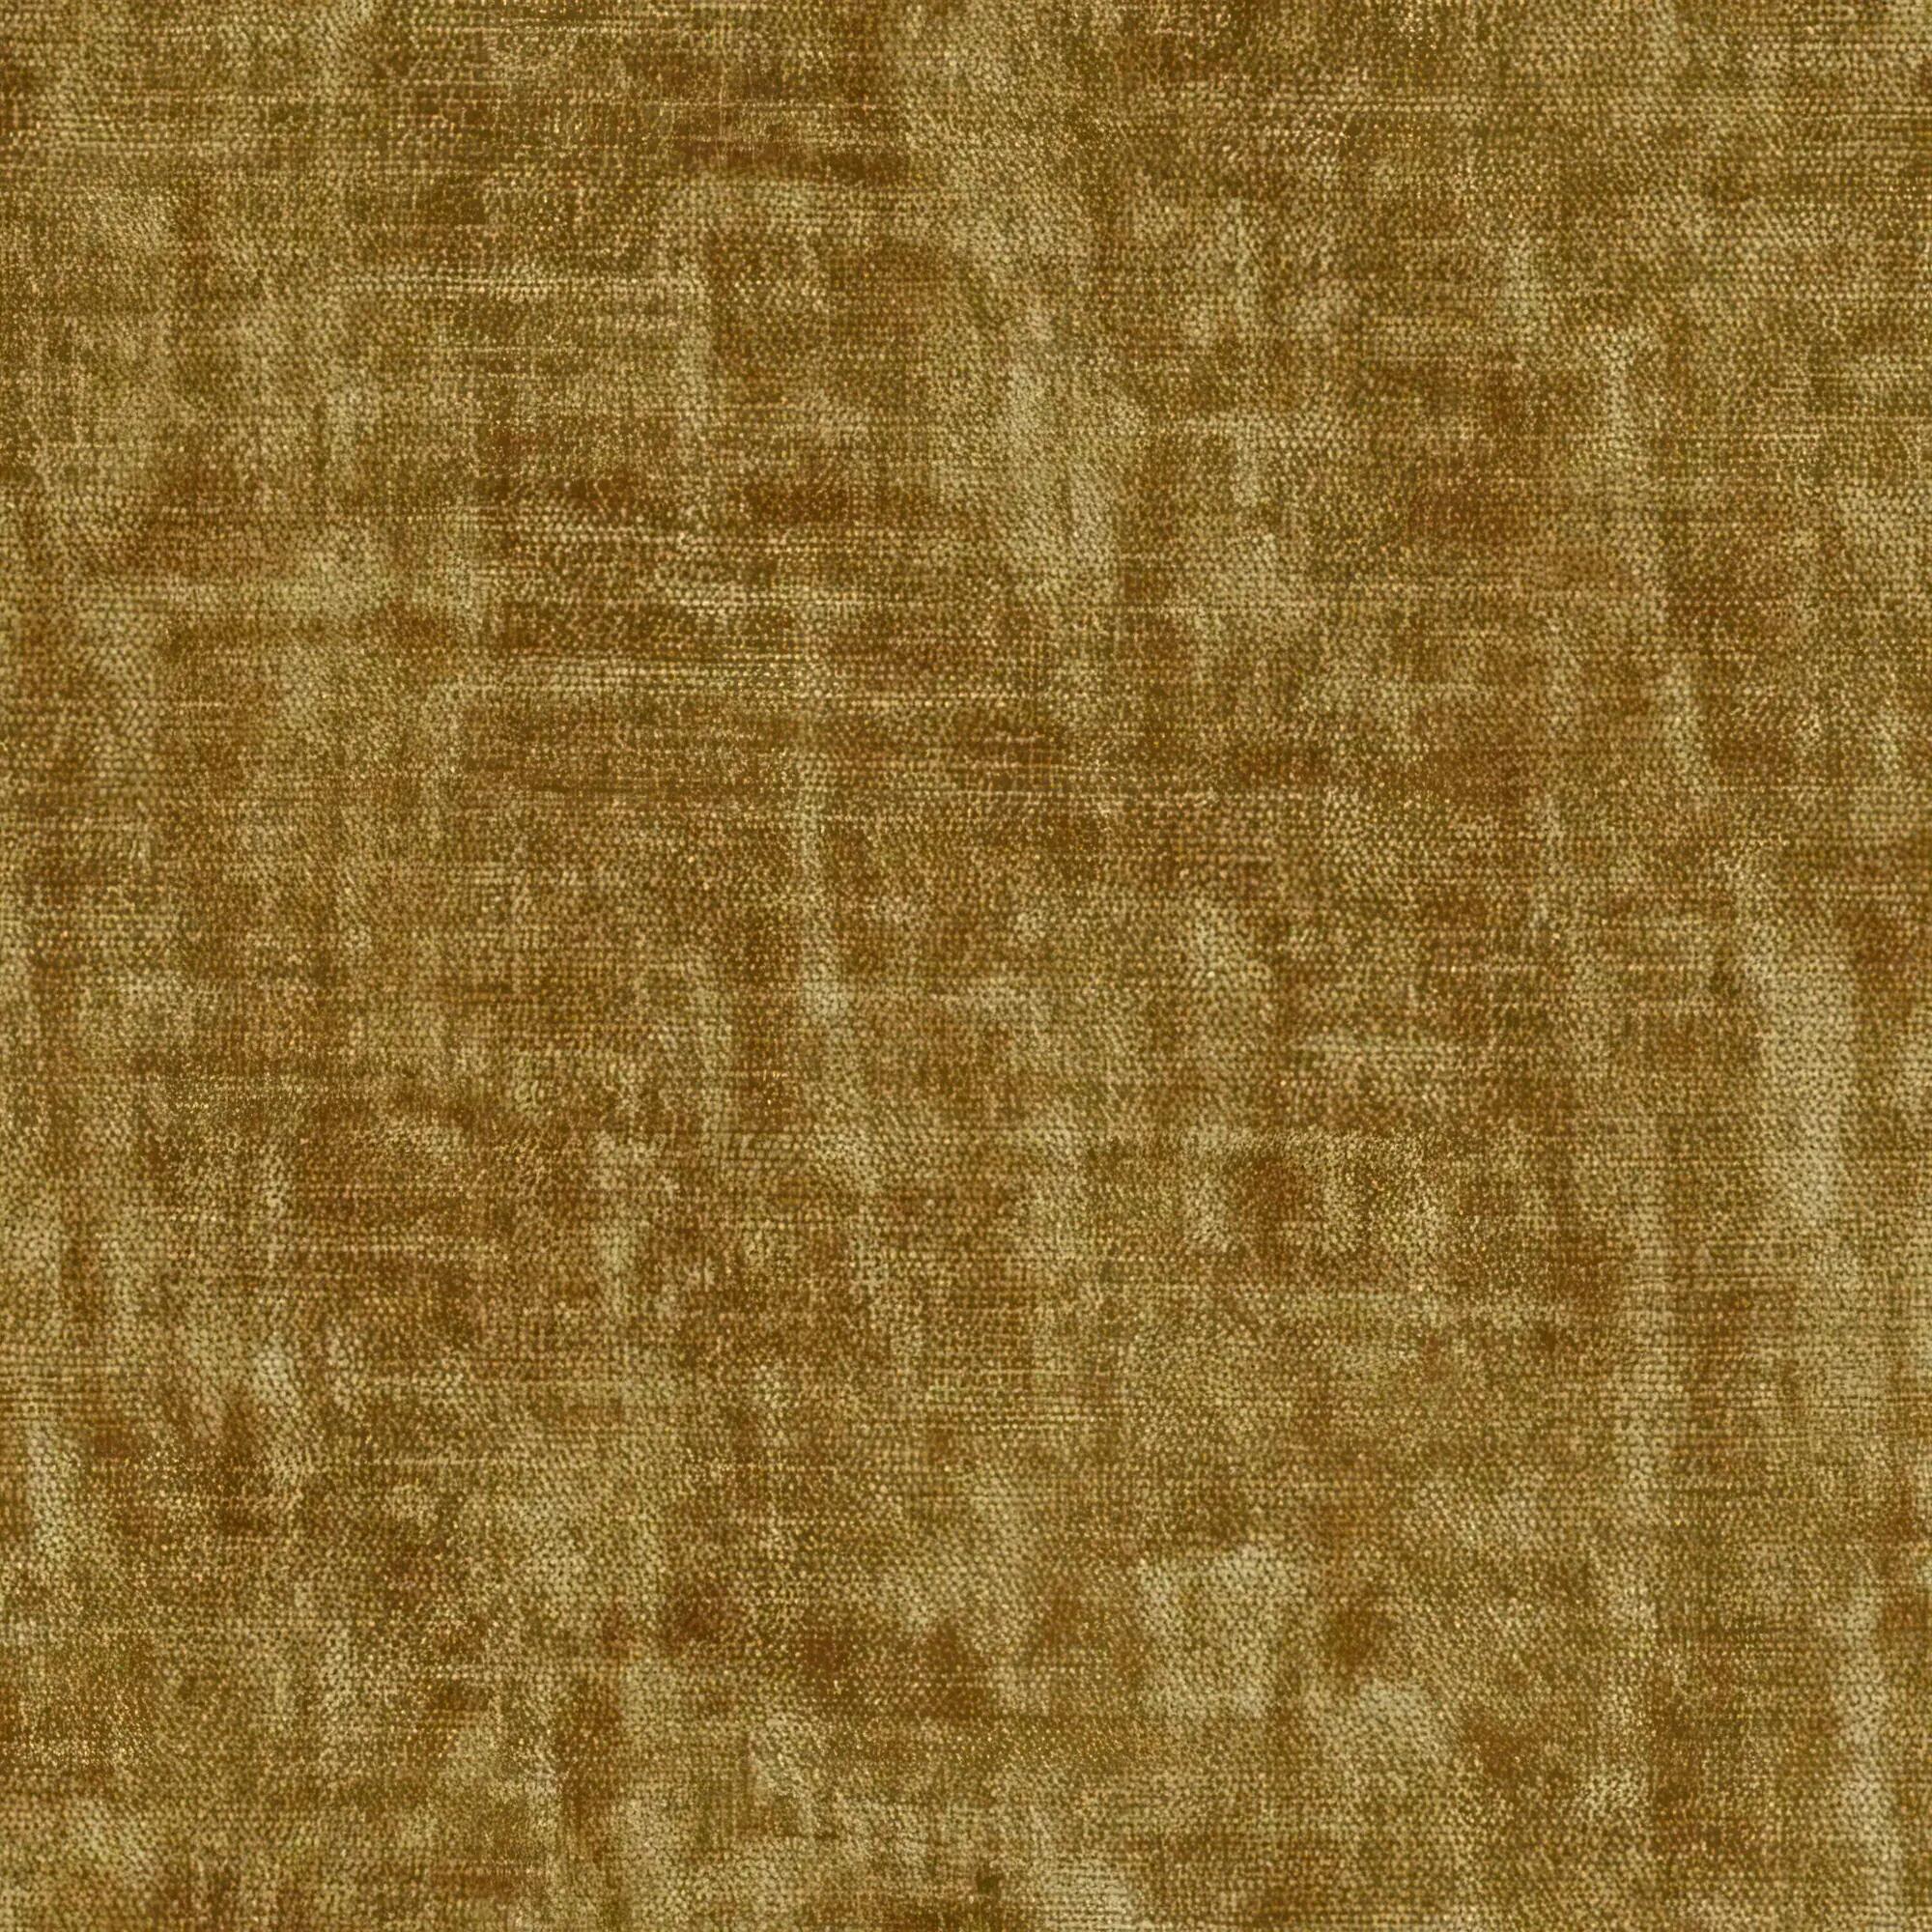 Tela al corte tapicería chenilla york mostaza ancho 275 cm